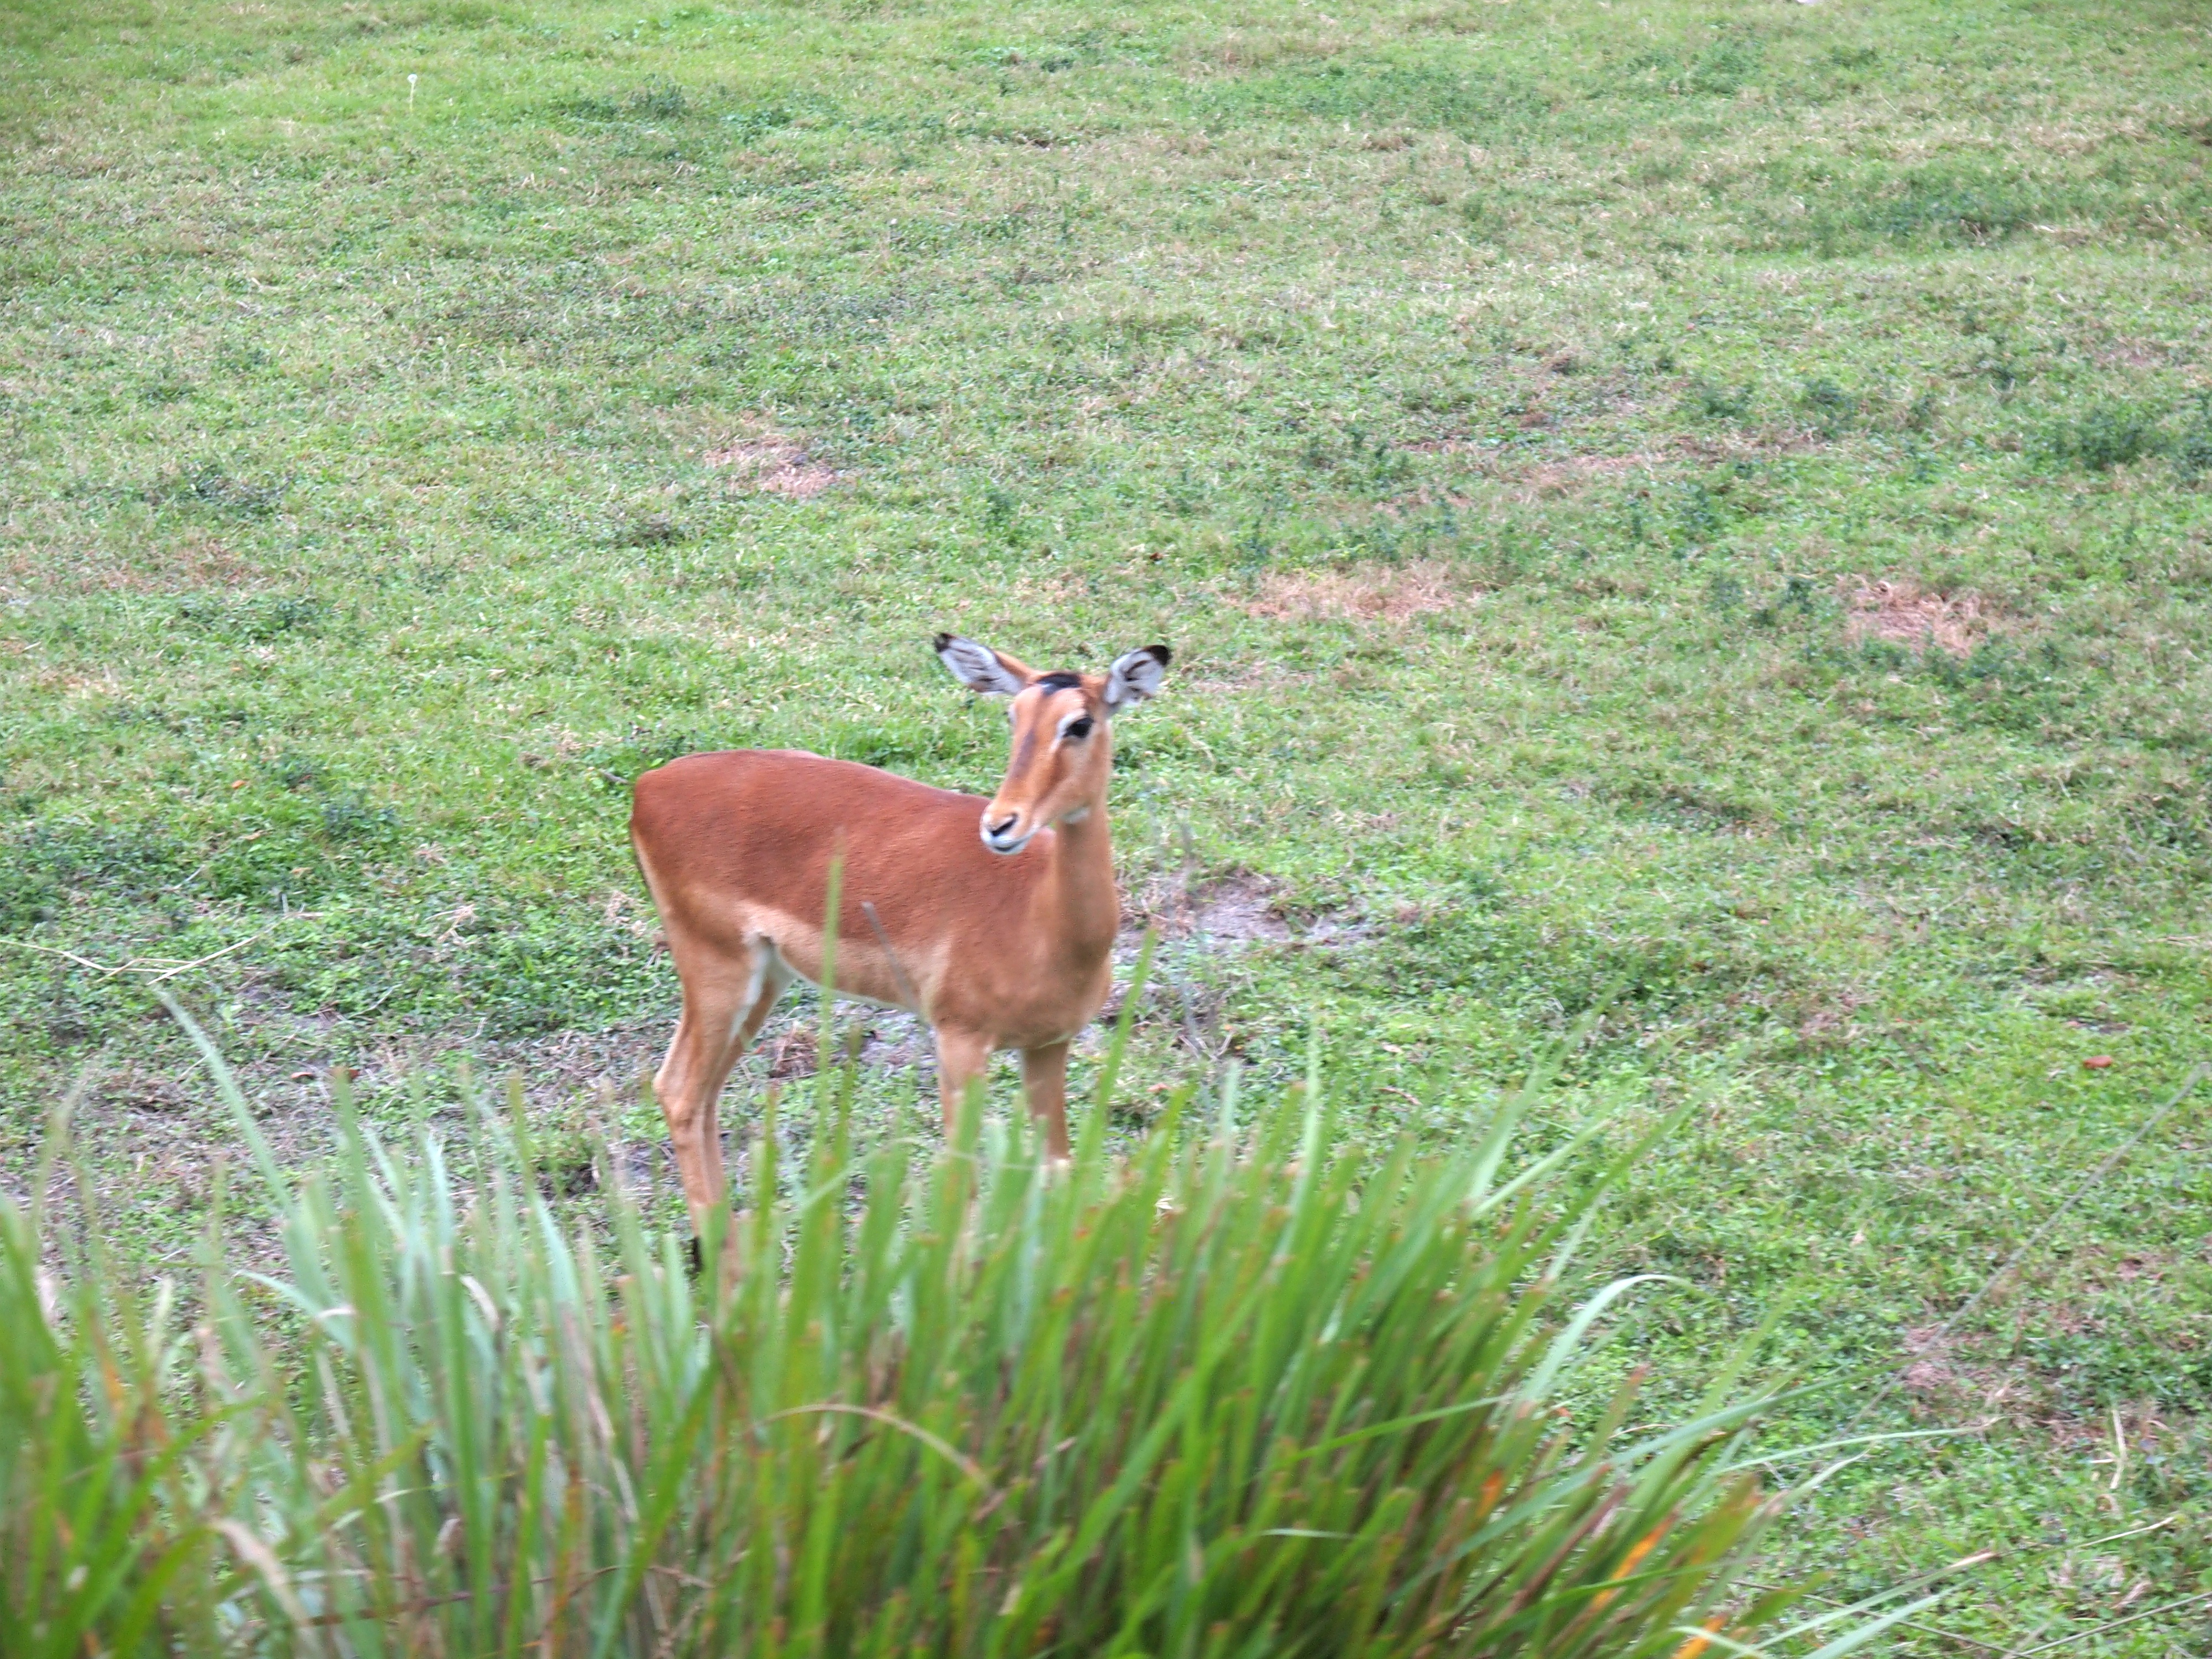 Antelope or gazelle #4